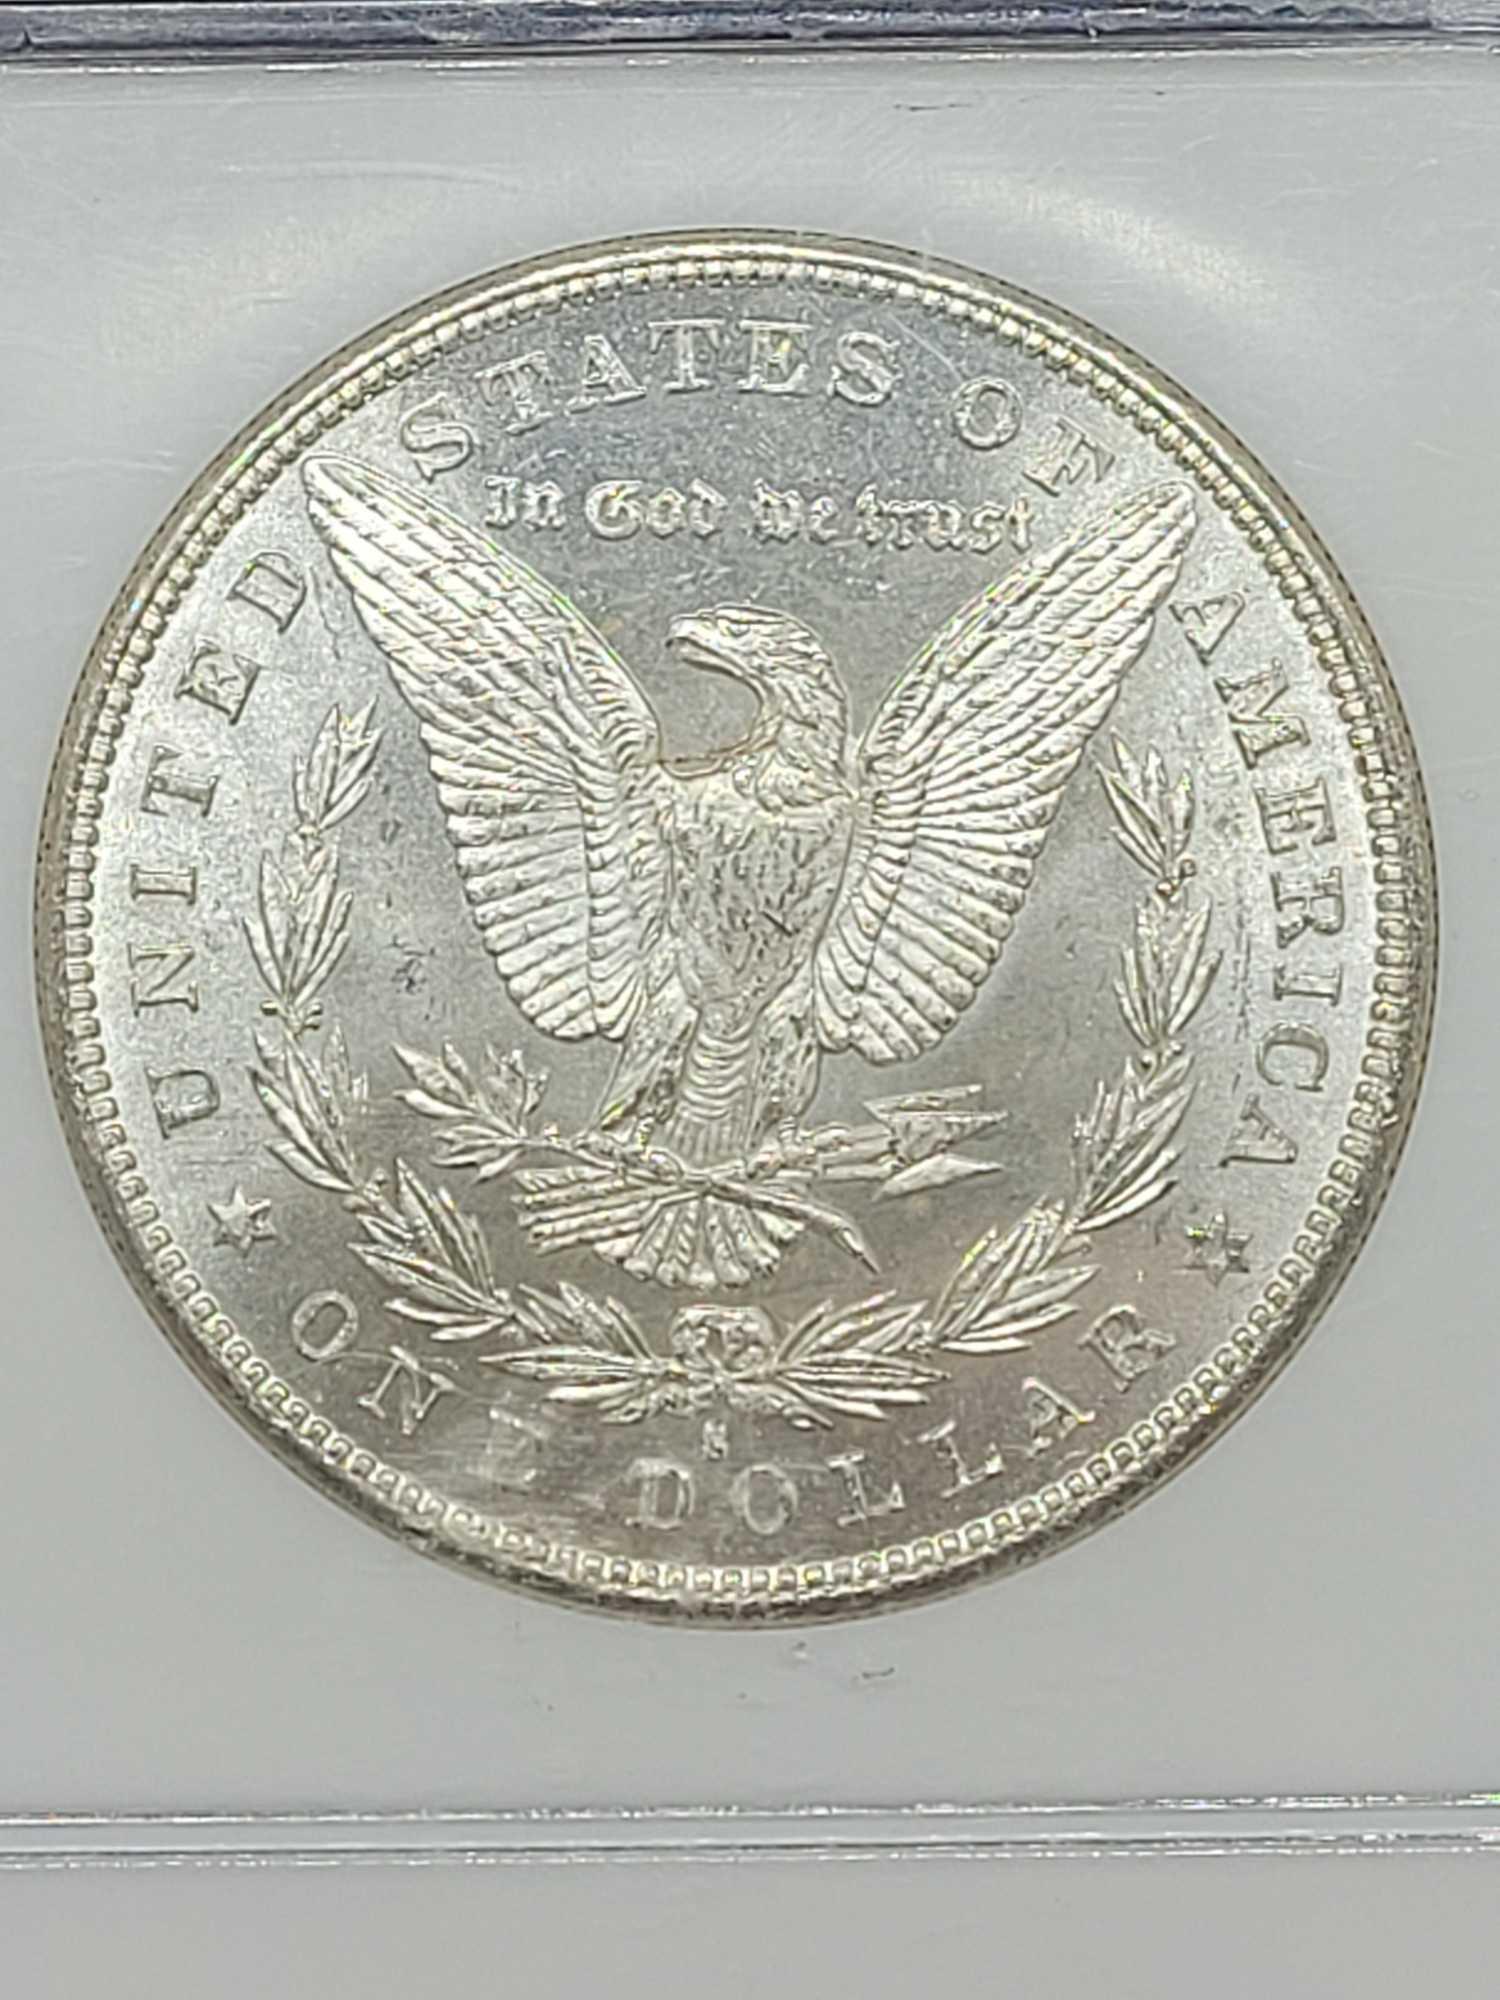 Morgan silver dollar 1879-s MS46 Graded Frosty slab